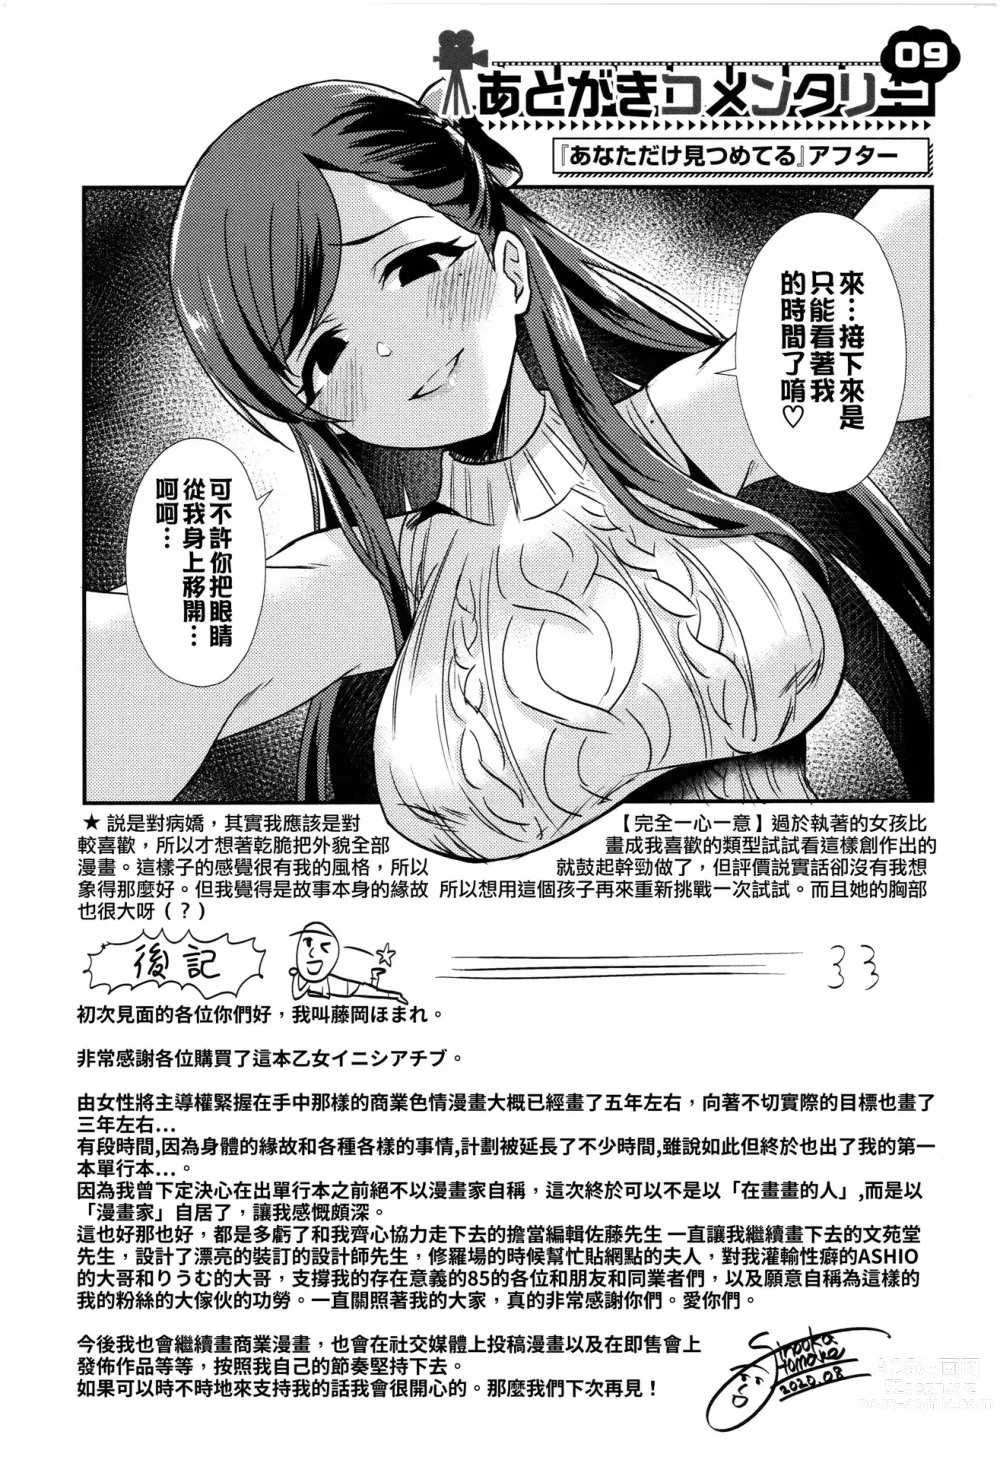 Page 194 of manga Otome Initiative - Girls Initiative (uncensored)